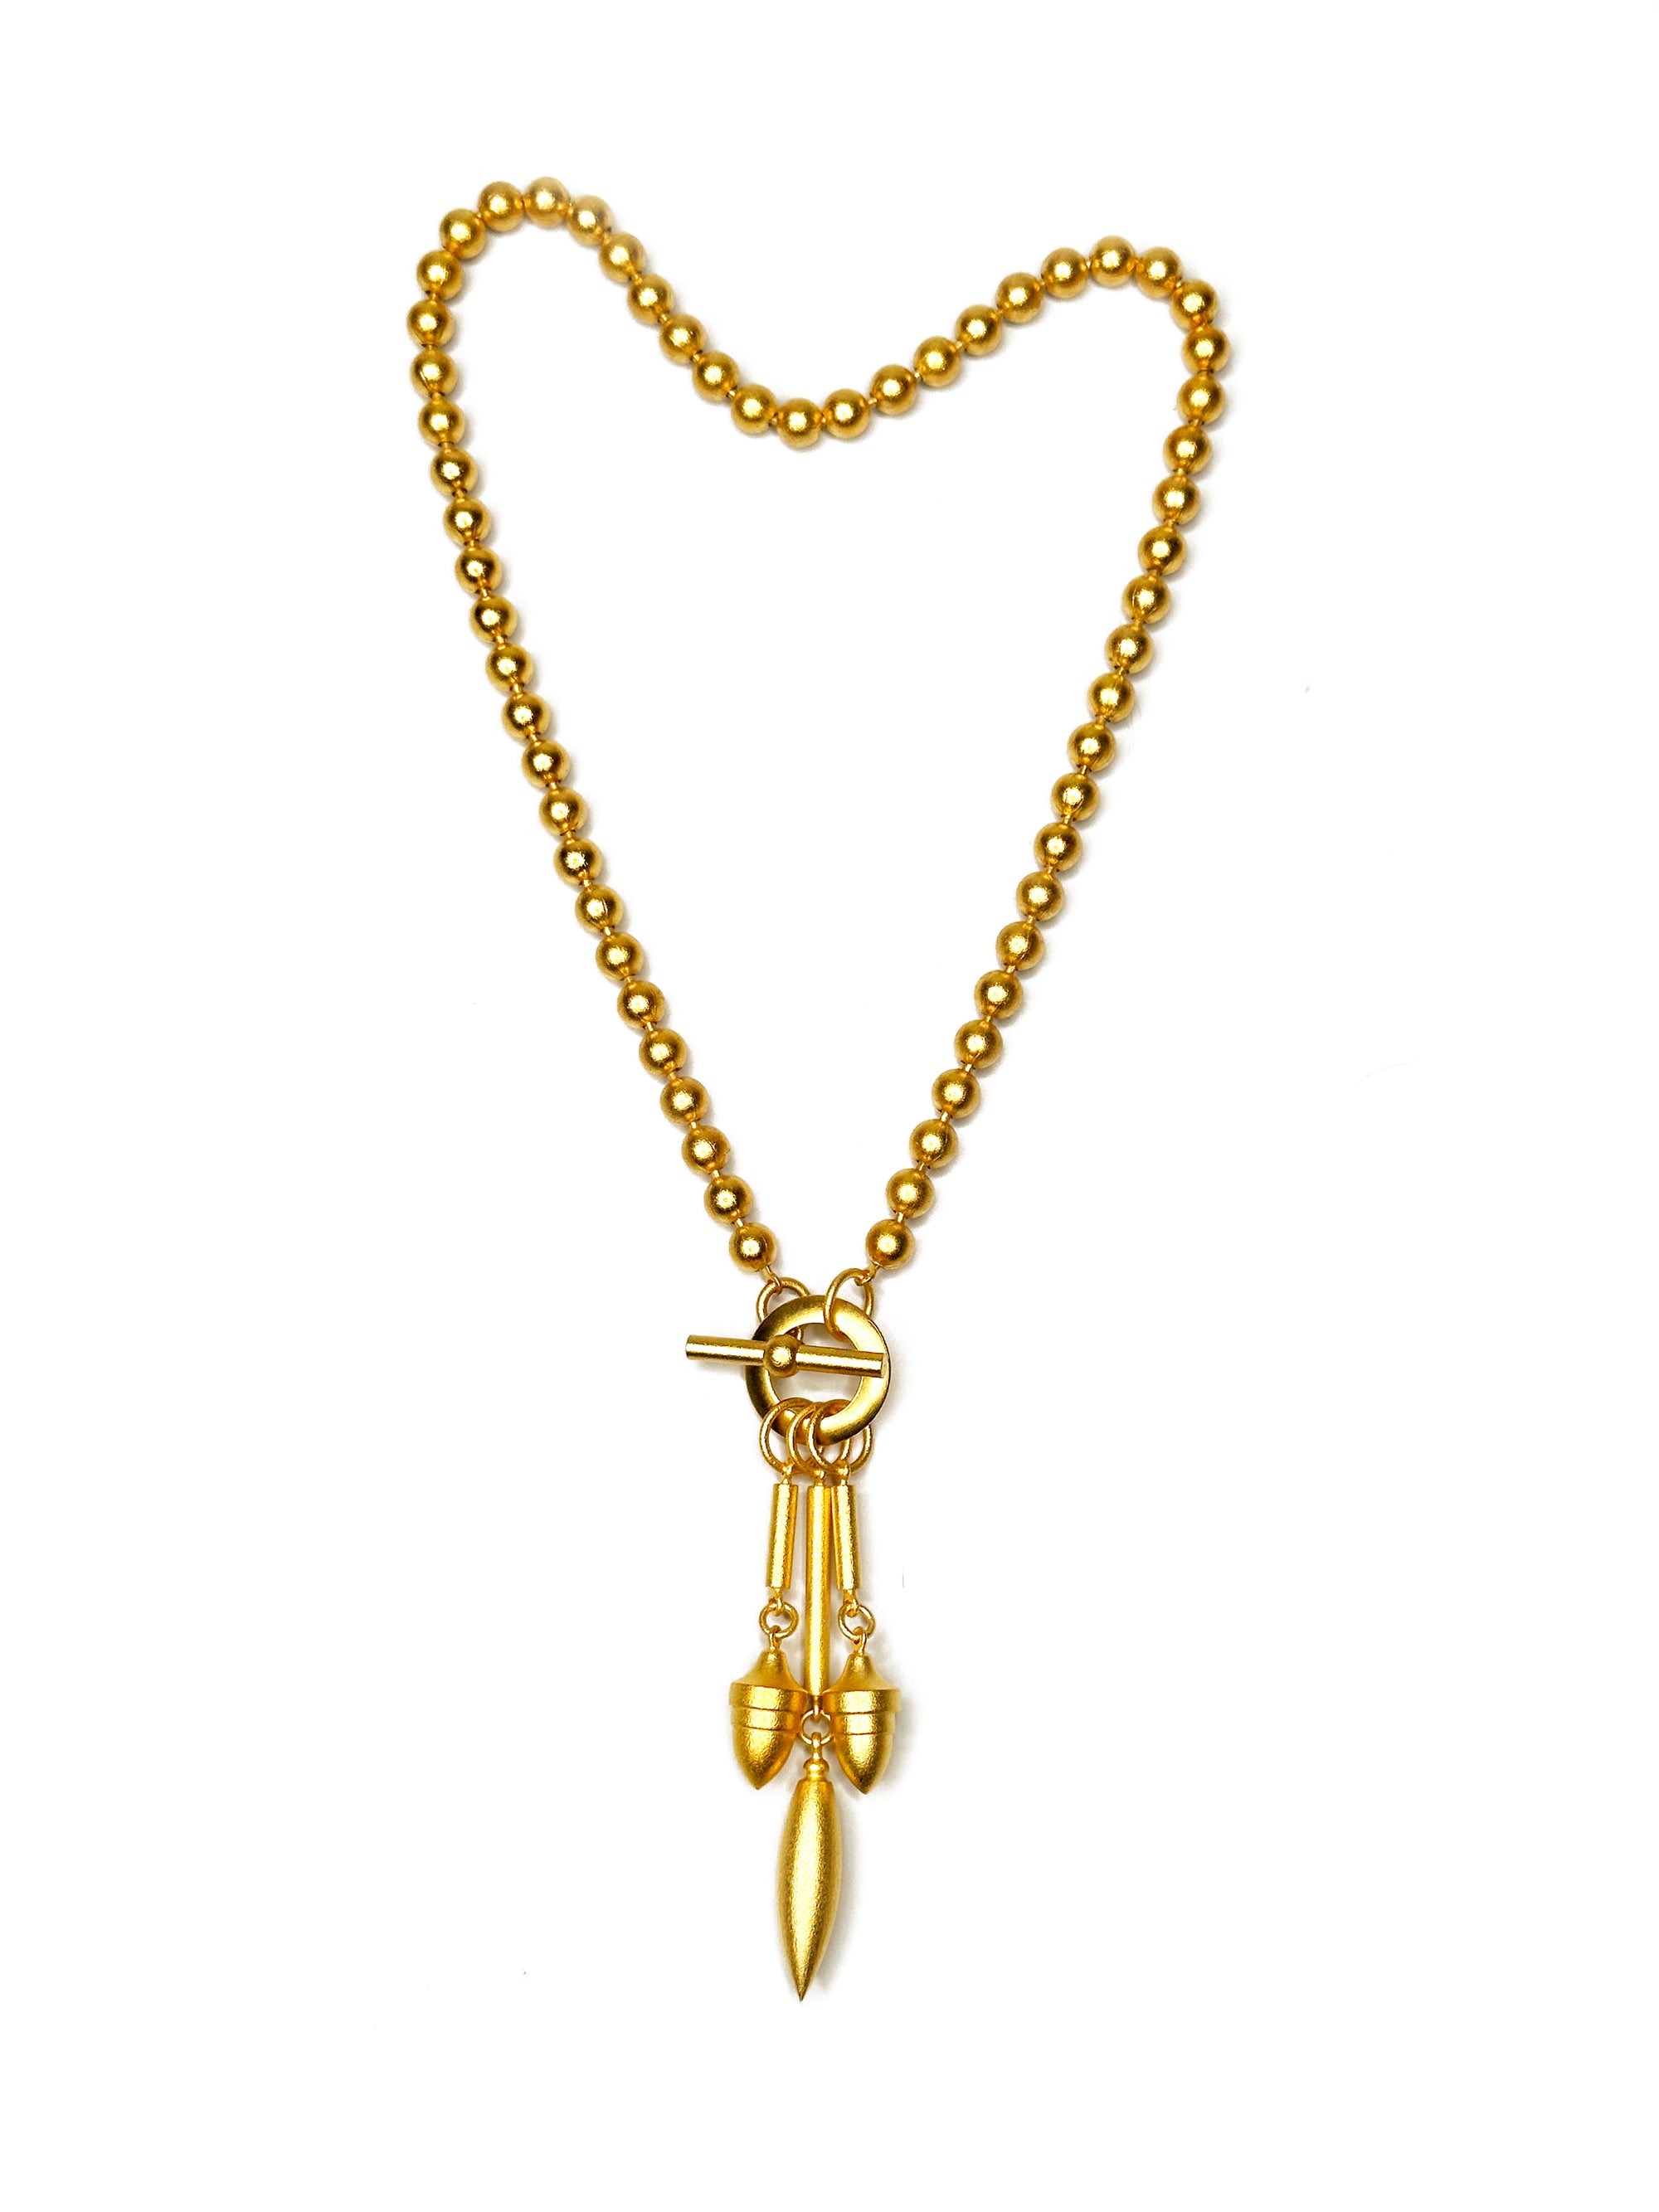 Acorn Drop Bead Chain Necklace | Erica Zap Designs